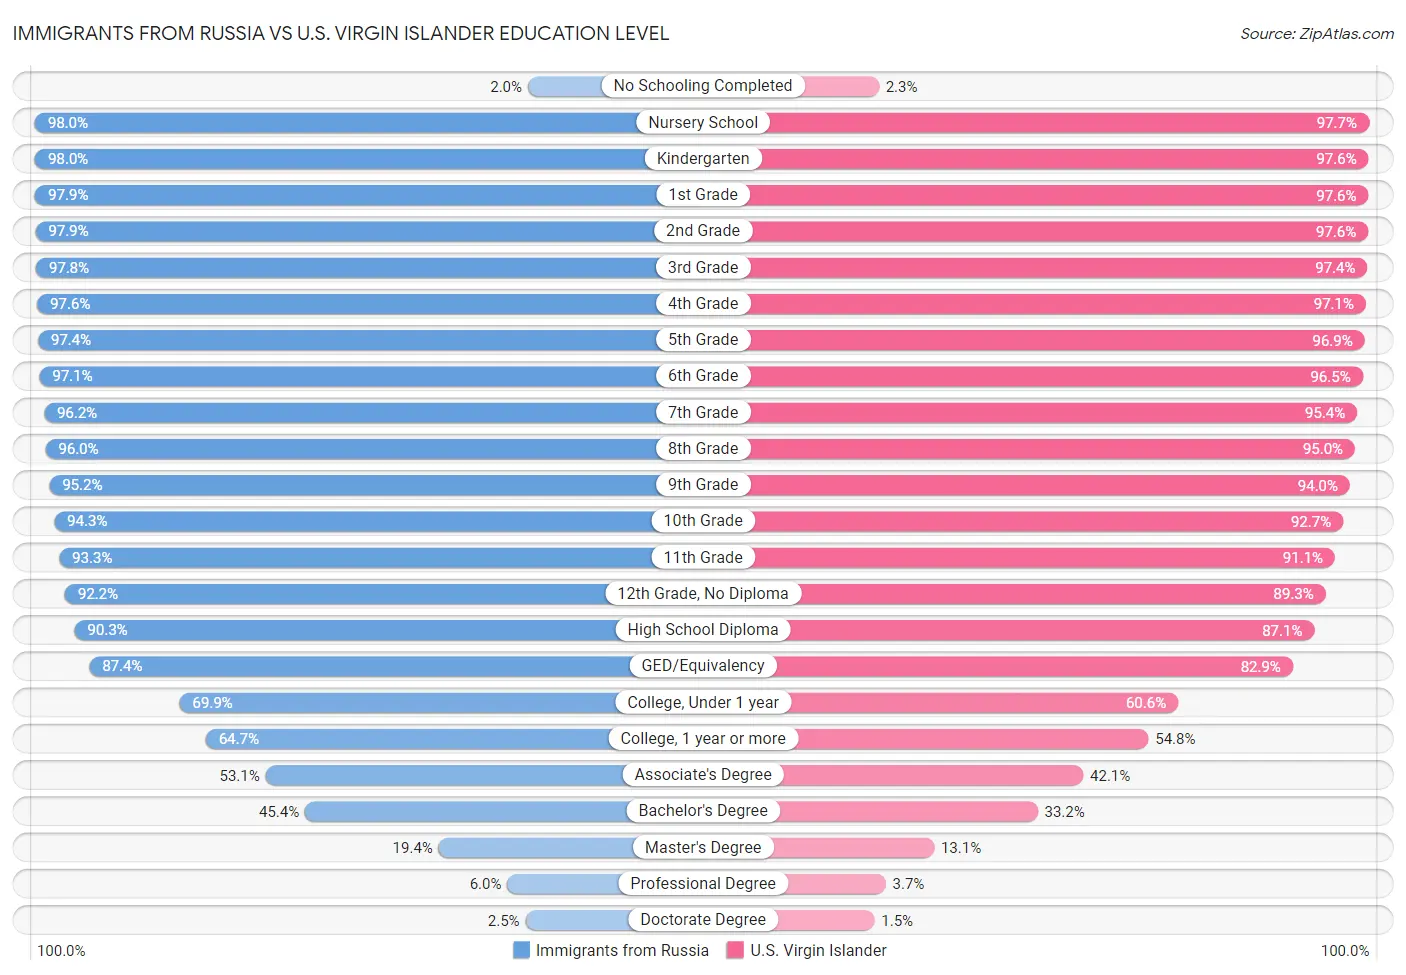 Immigrants from Russia vs U.S. Virgin Islander Education Level